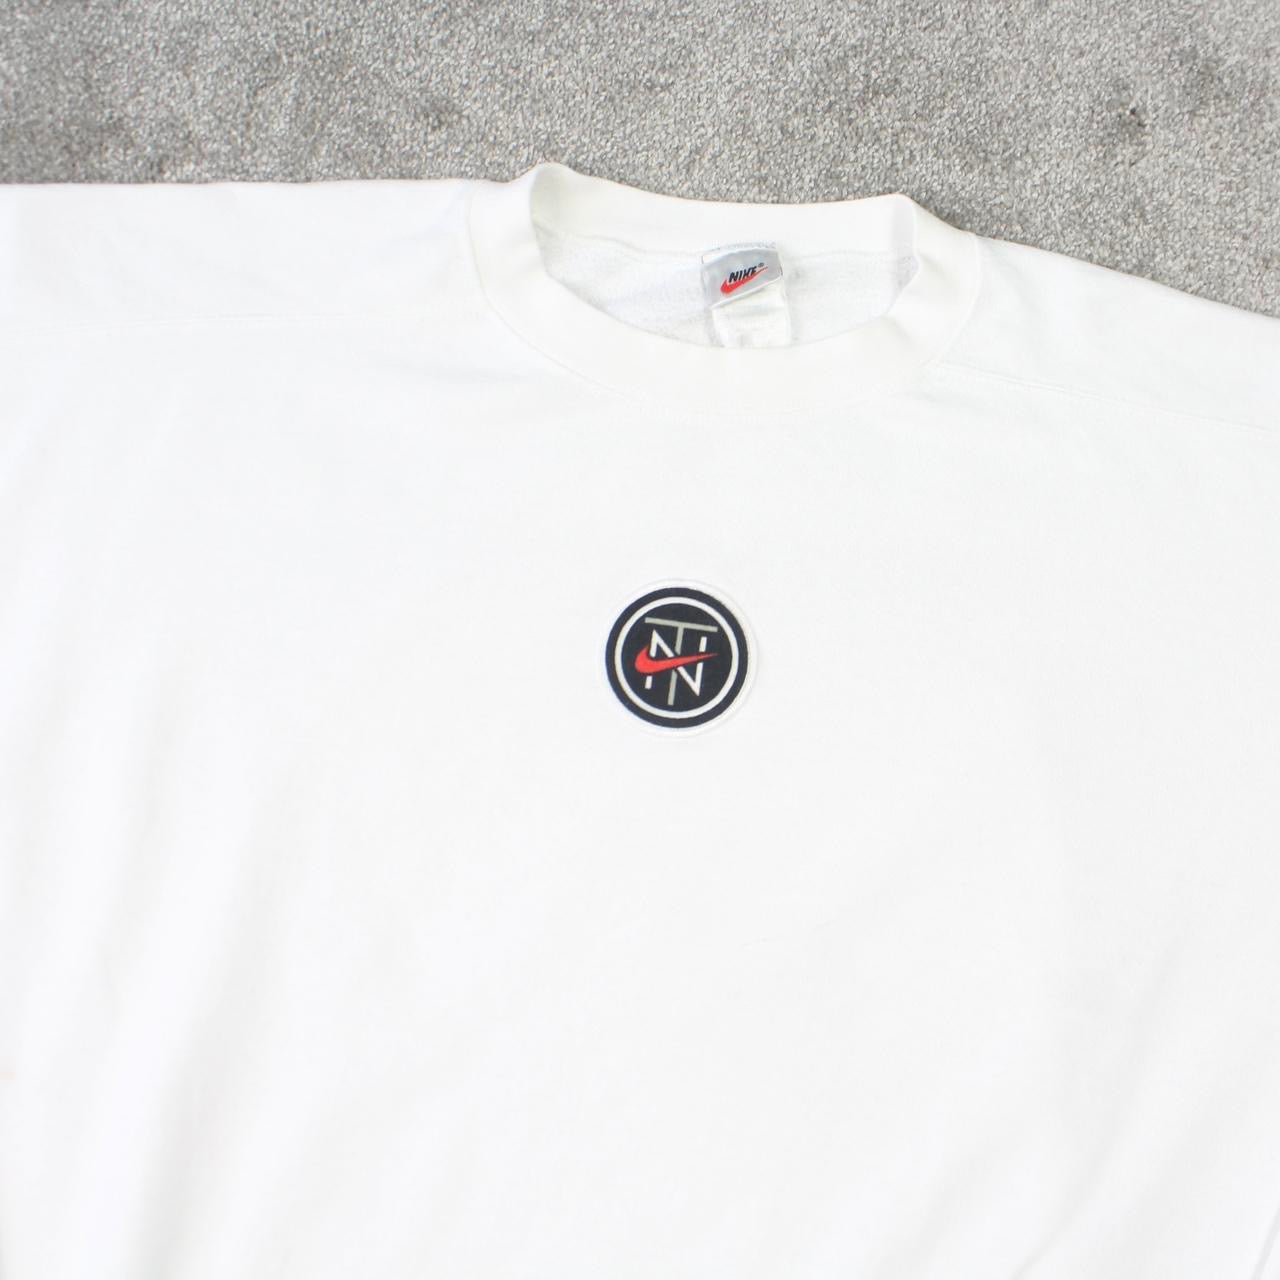 SUPER RARE 1990s Vintage Nike Town Sweatshirt White - (L)